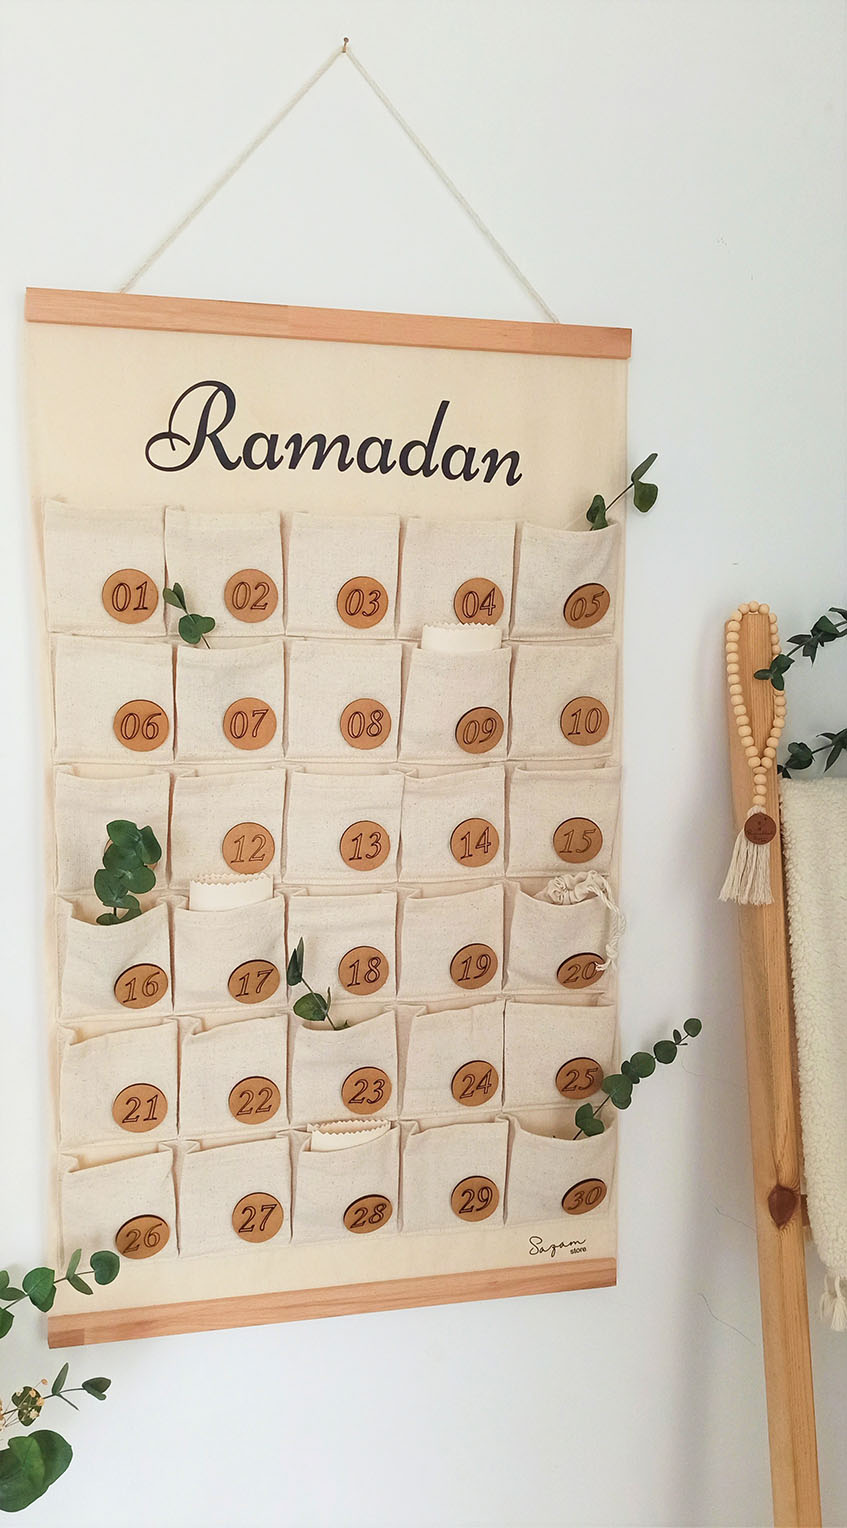 Calendrier De Ramadan Pour Enfant, Édition Ramadan, Calendrier Coton